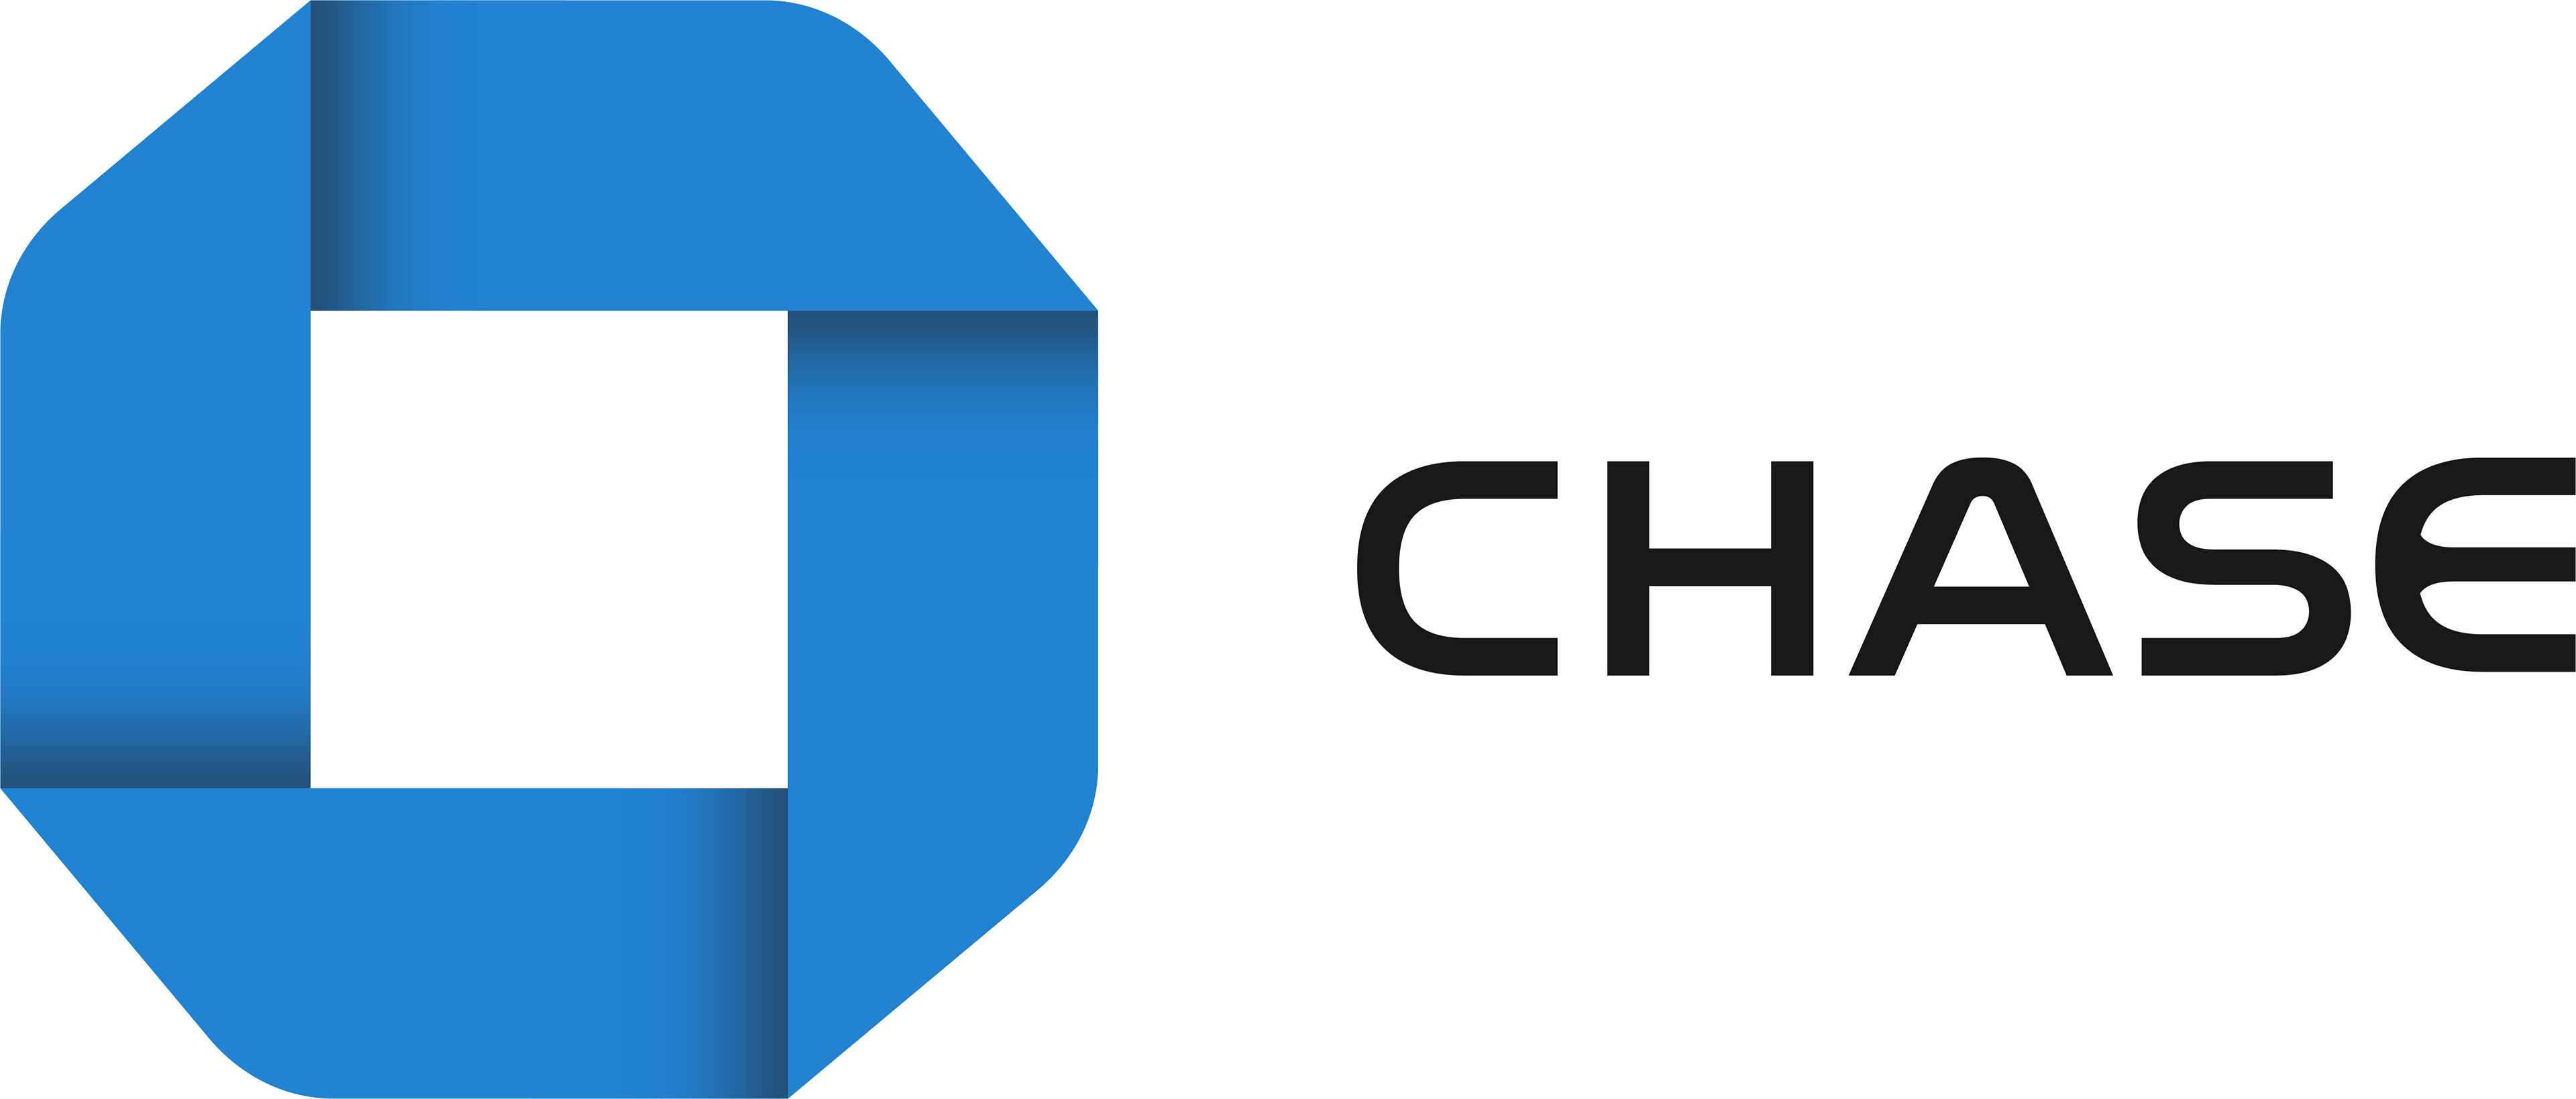 Current Chase Bank Logo - Proenza's Portfolio - Chase Bank Concept Logo